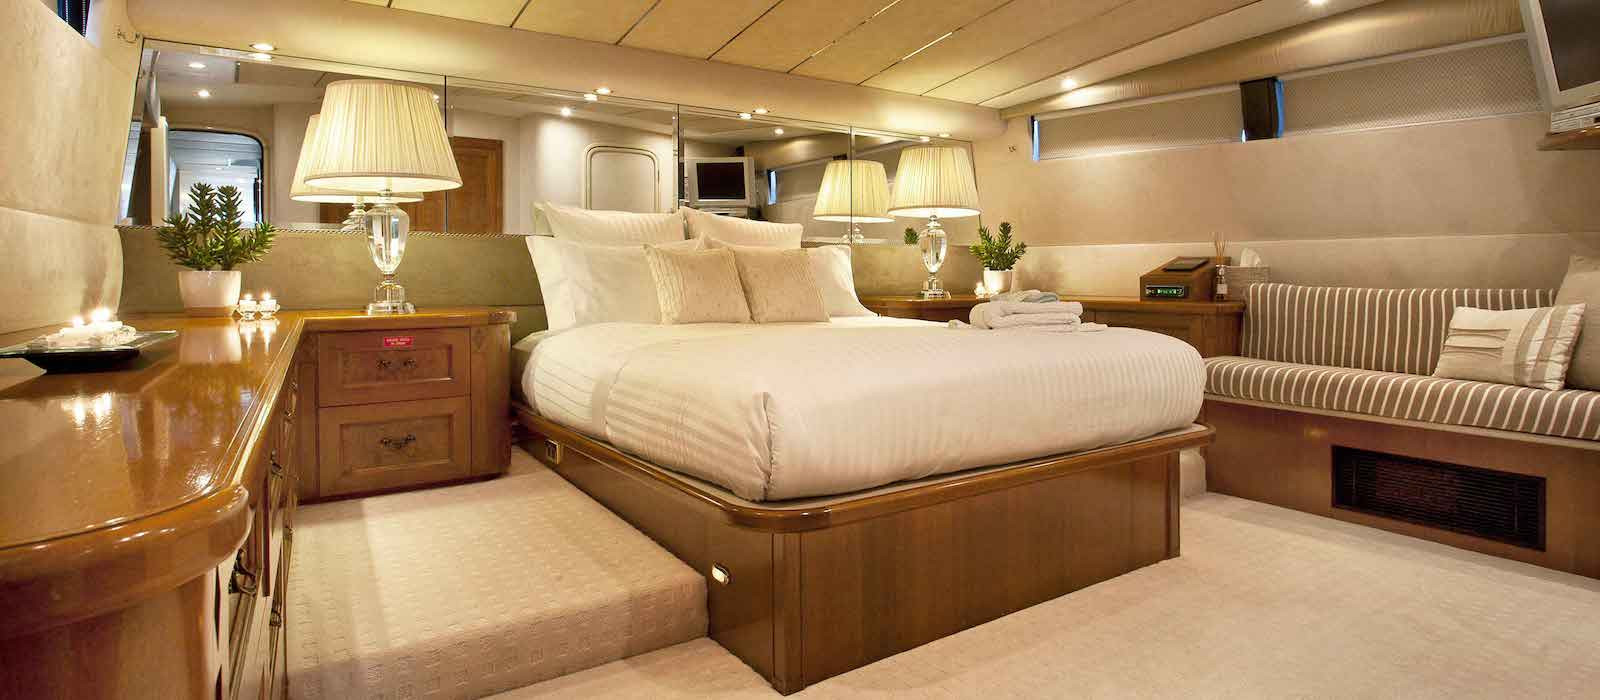 Master stateroom on Oscar Ii luxury boat hire